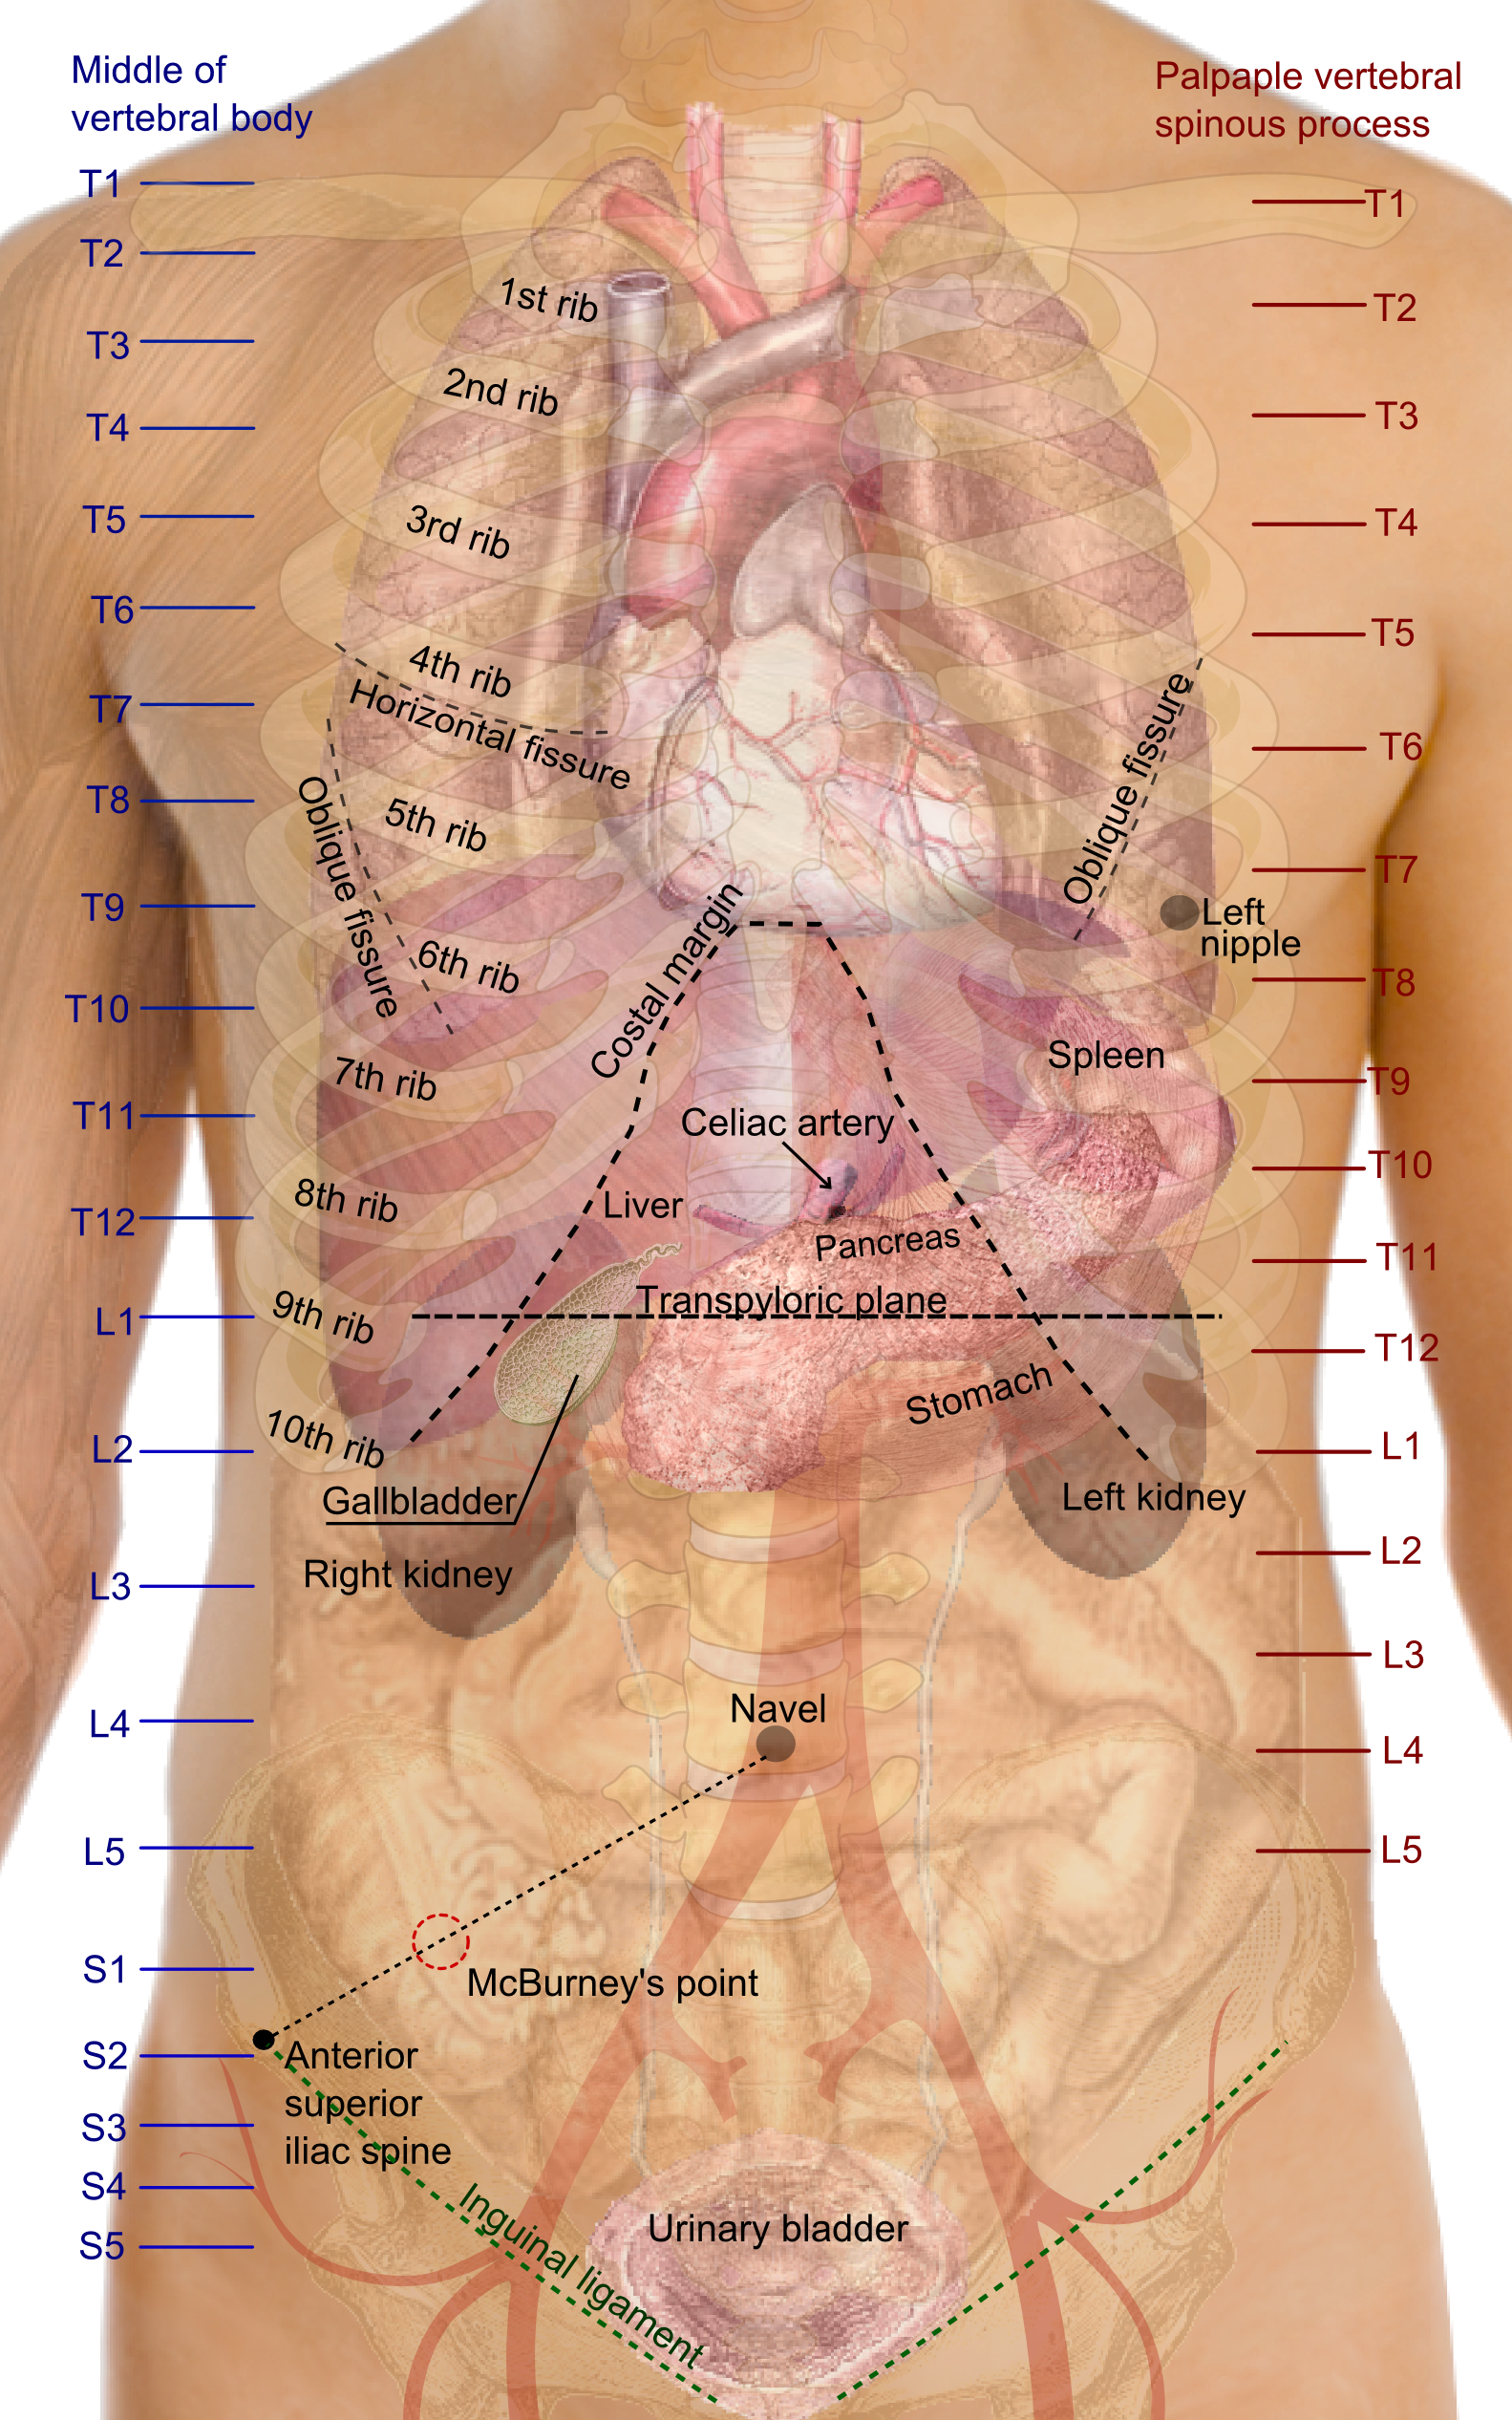 An image of a person's abdomen and torso